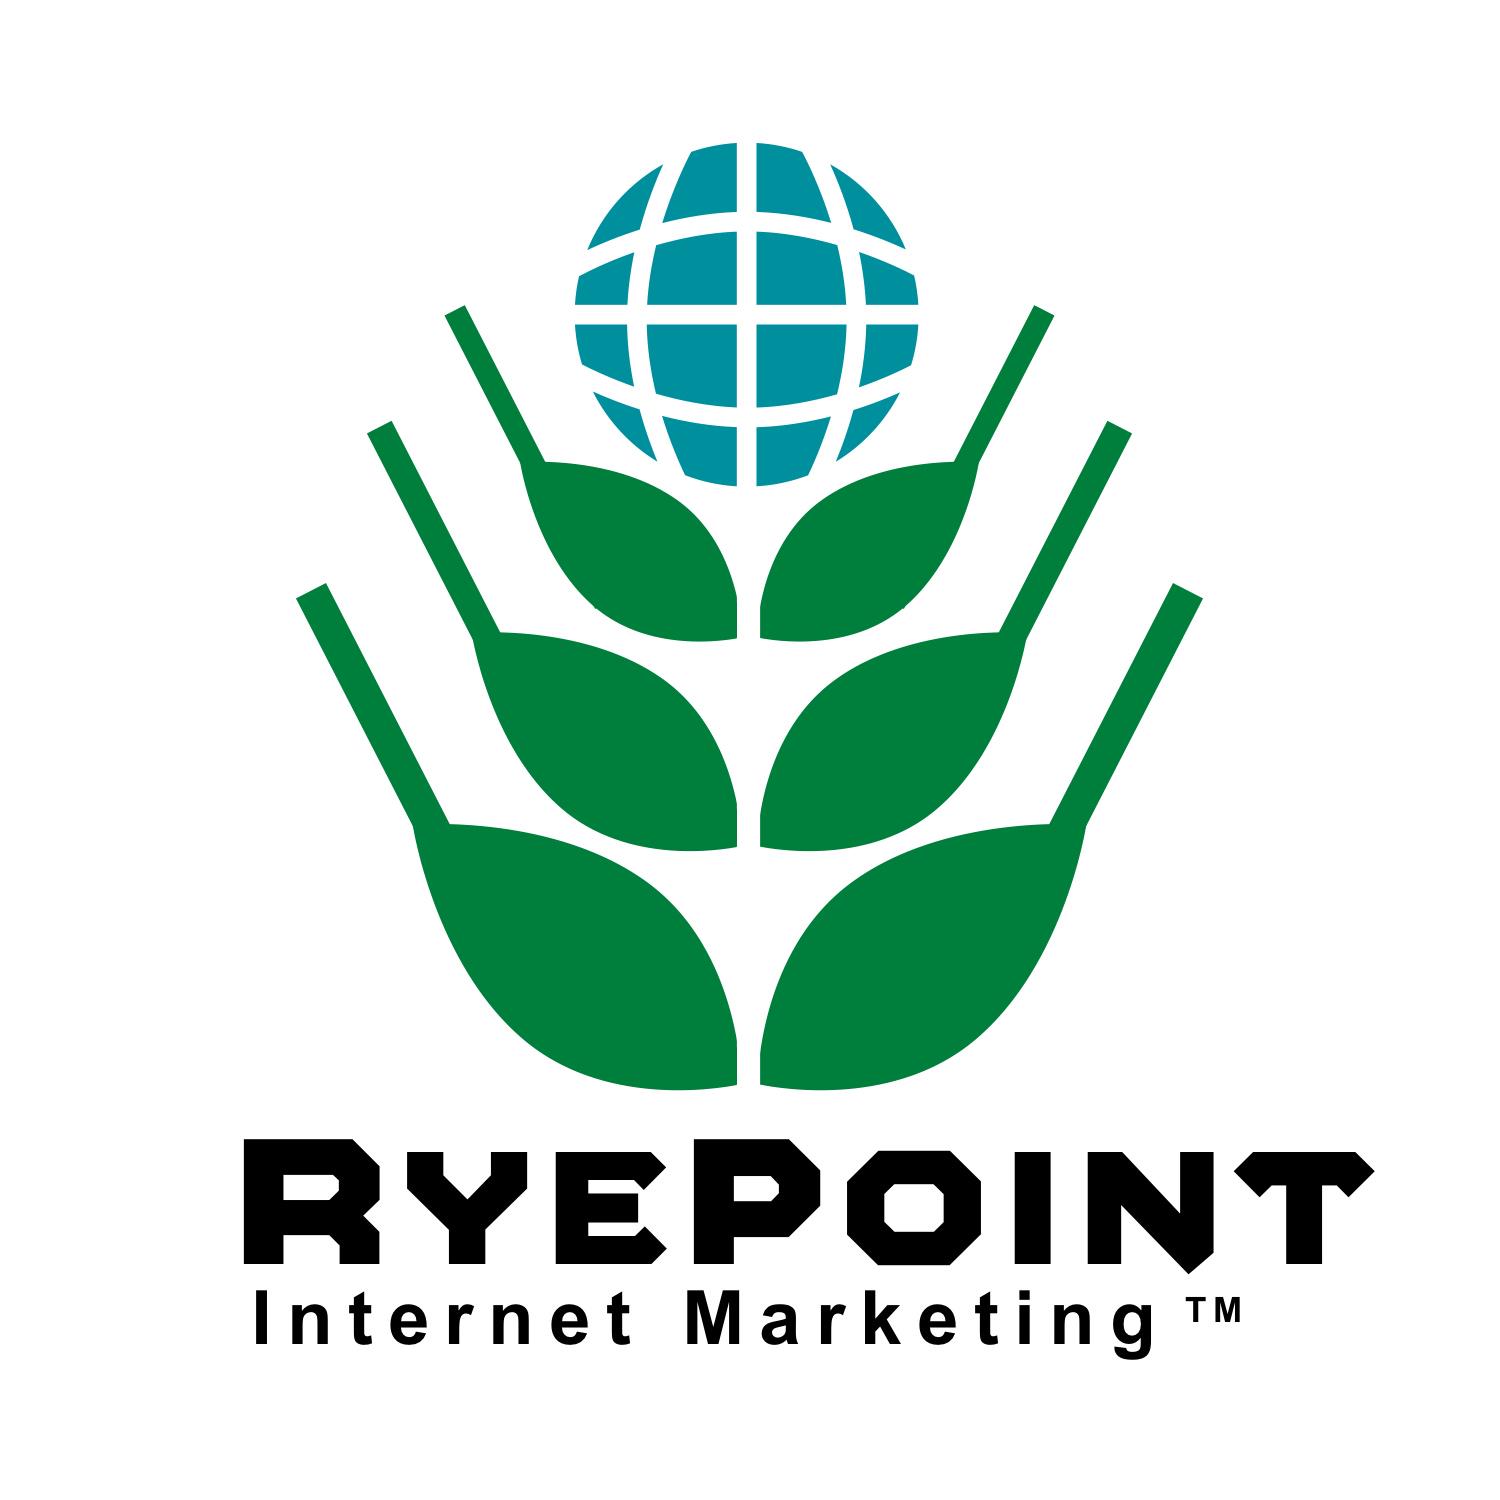 RyePoint Internet Marketing profile on Qualified.One